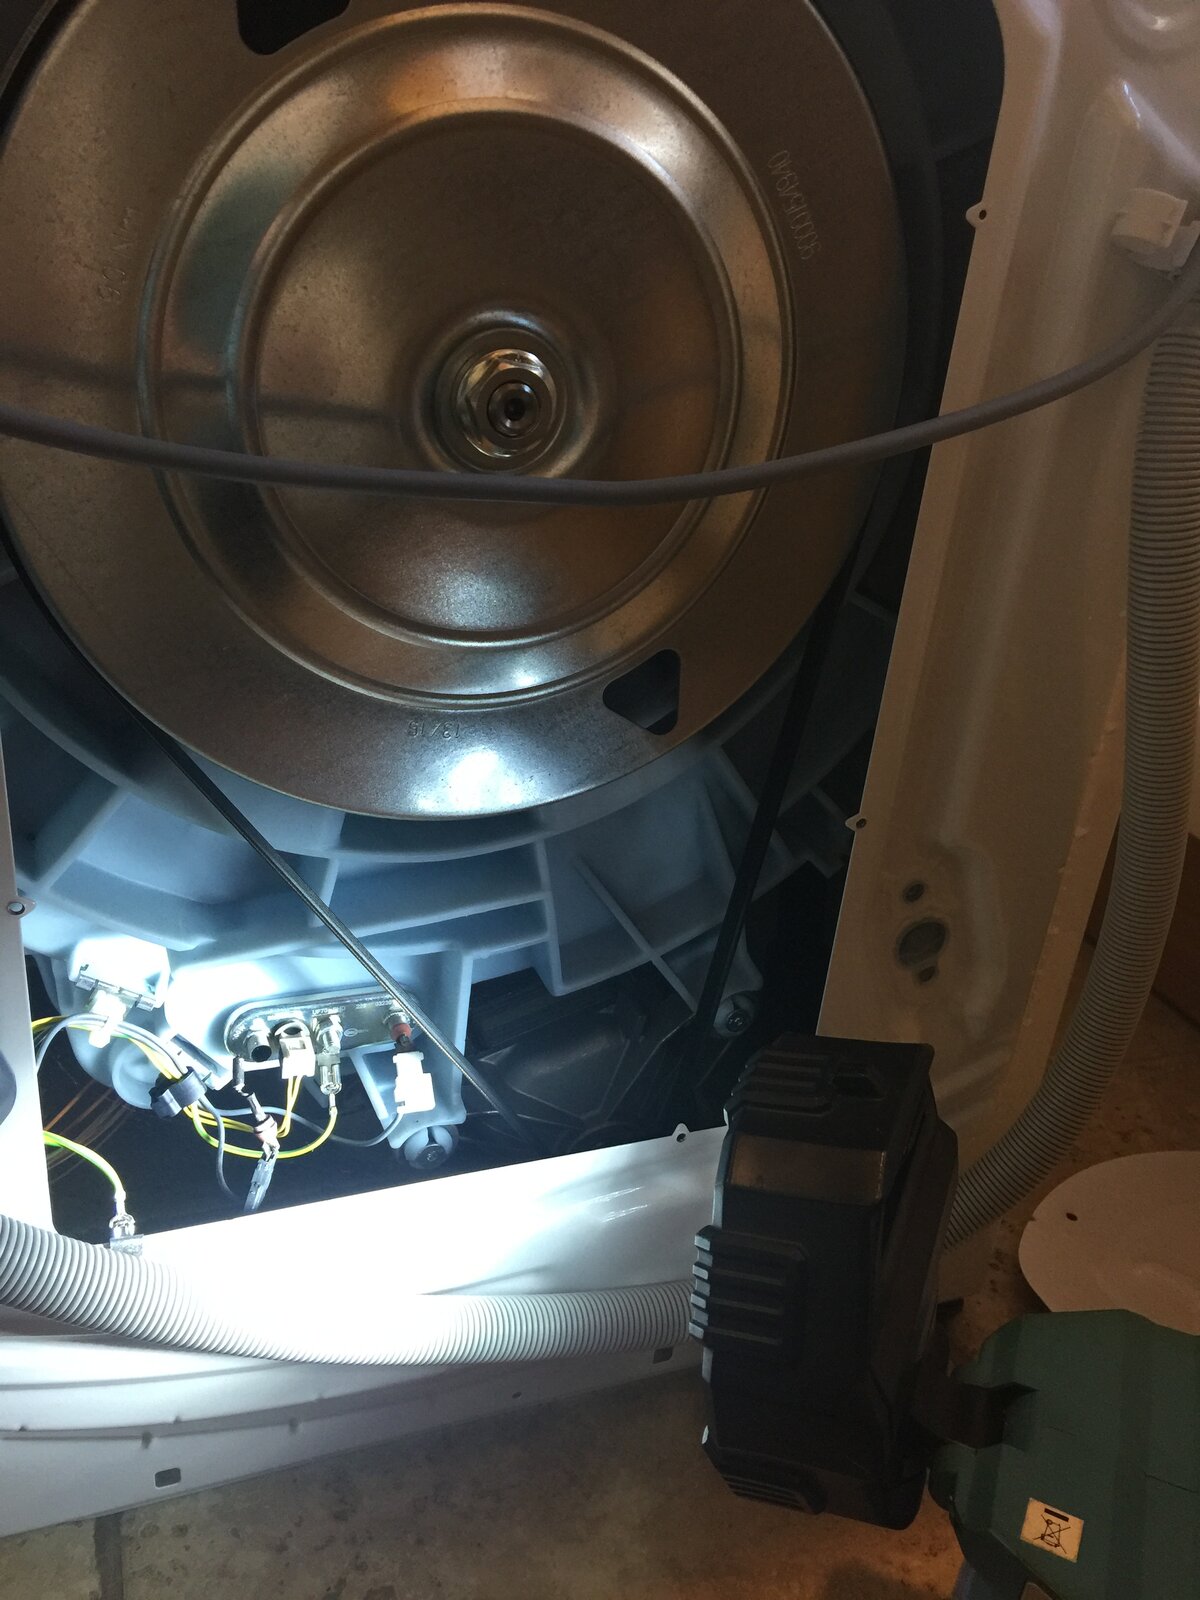 Bosch Washing Machine - gone up in smoke | DIYnot Forums